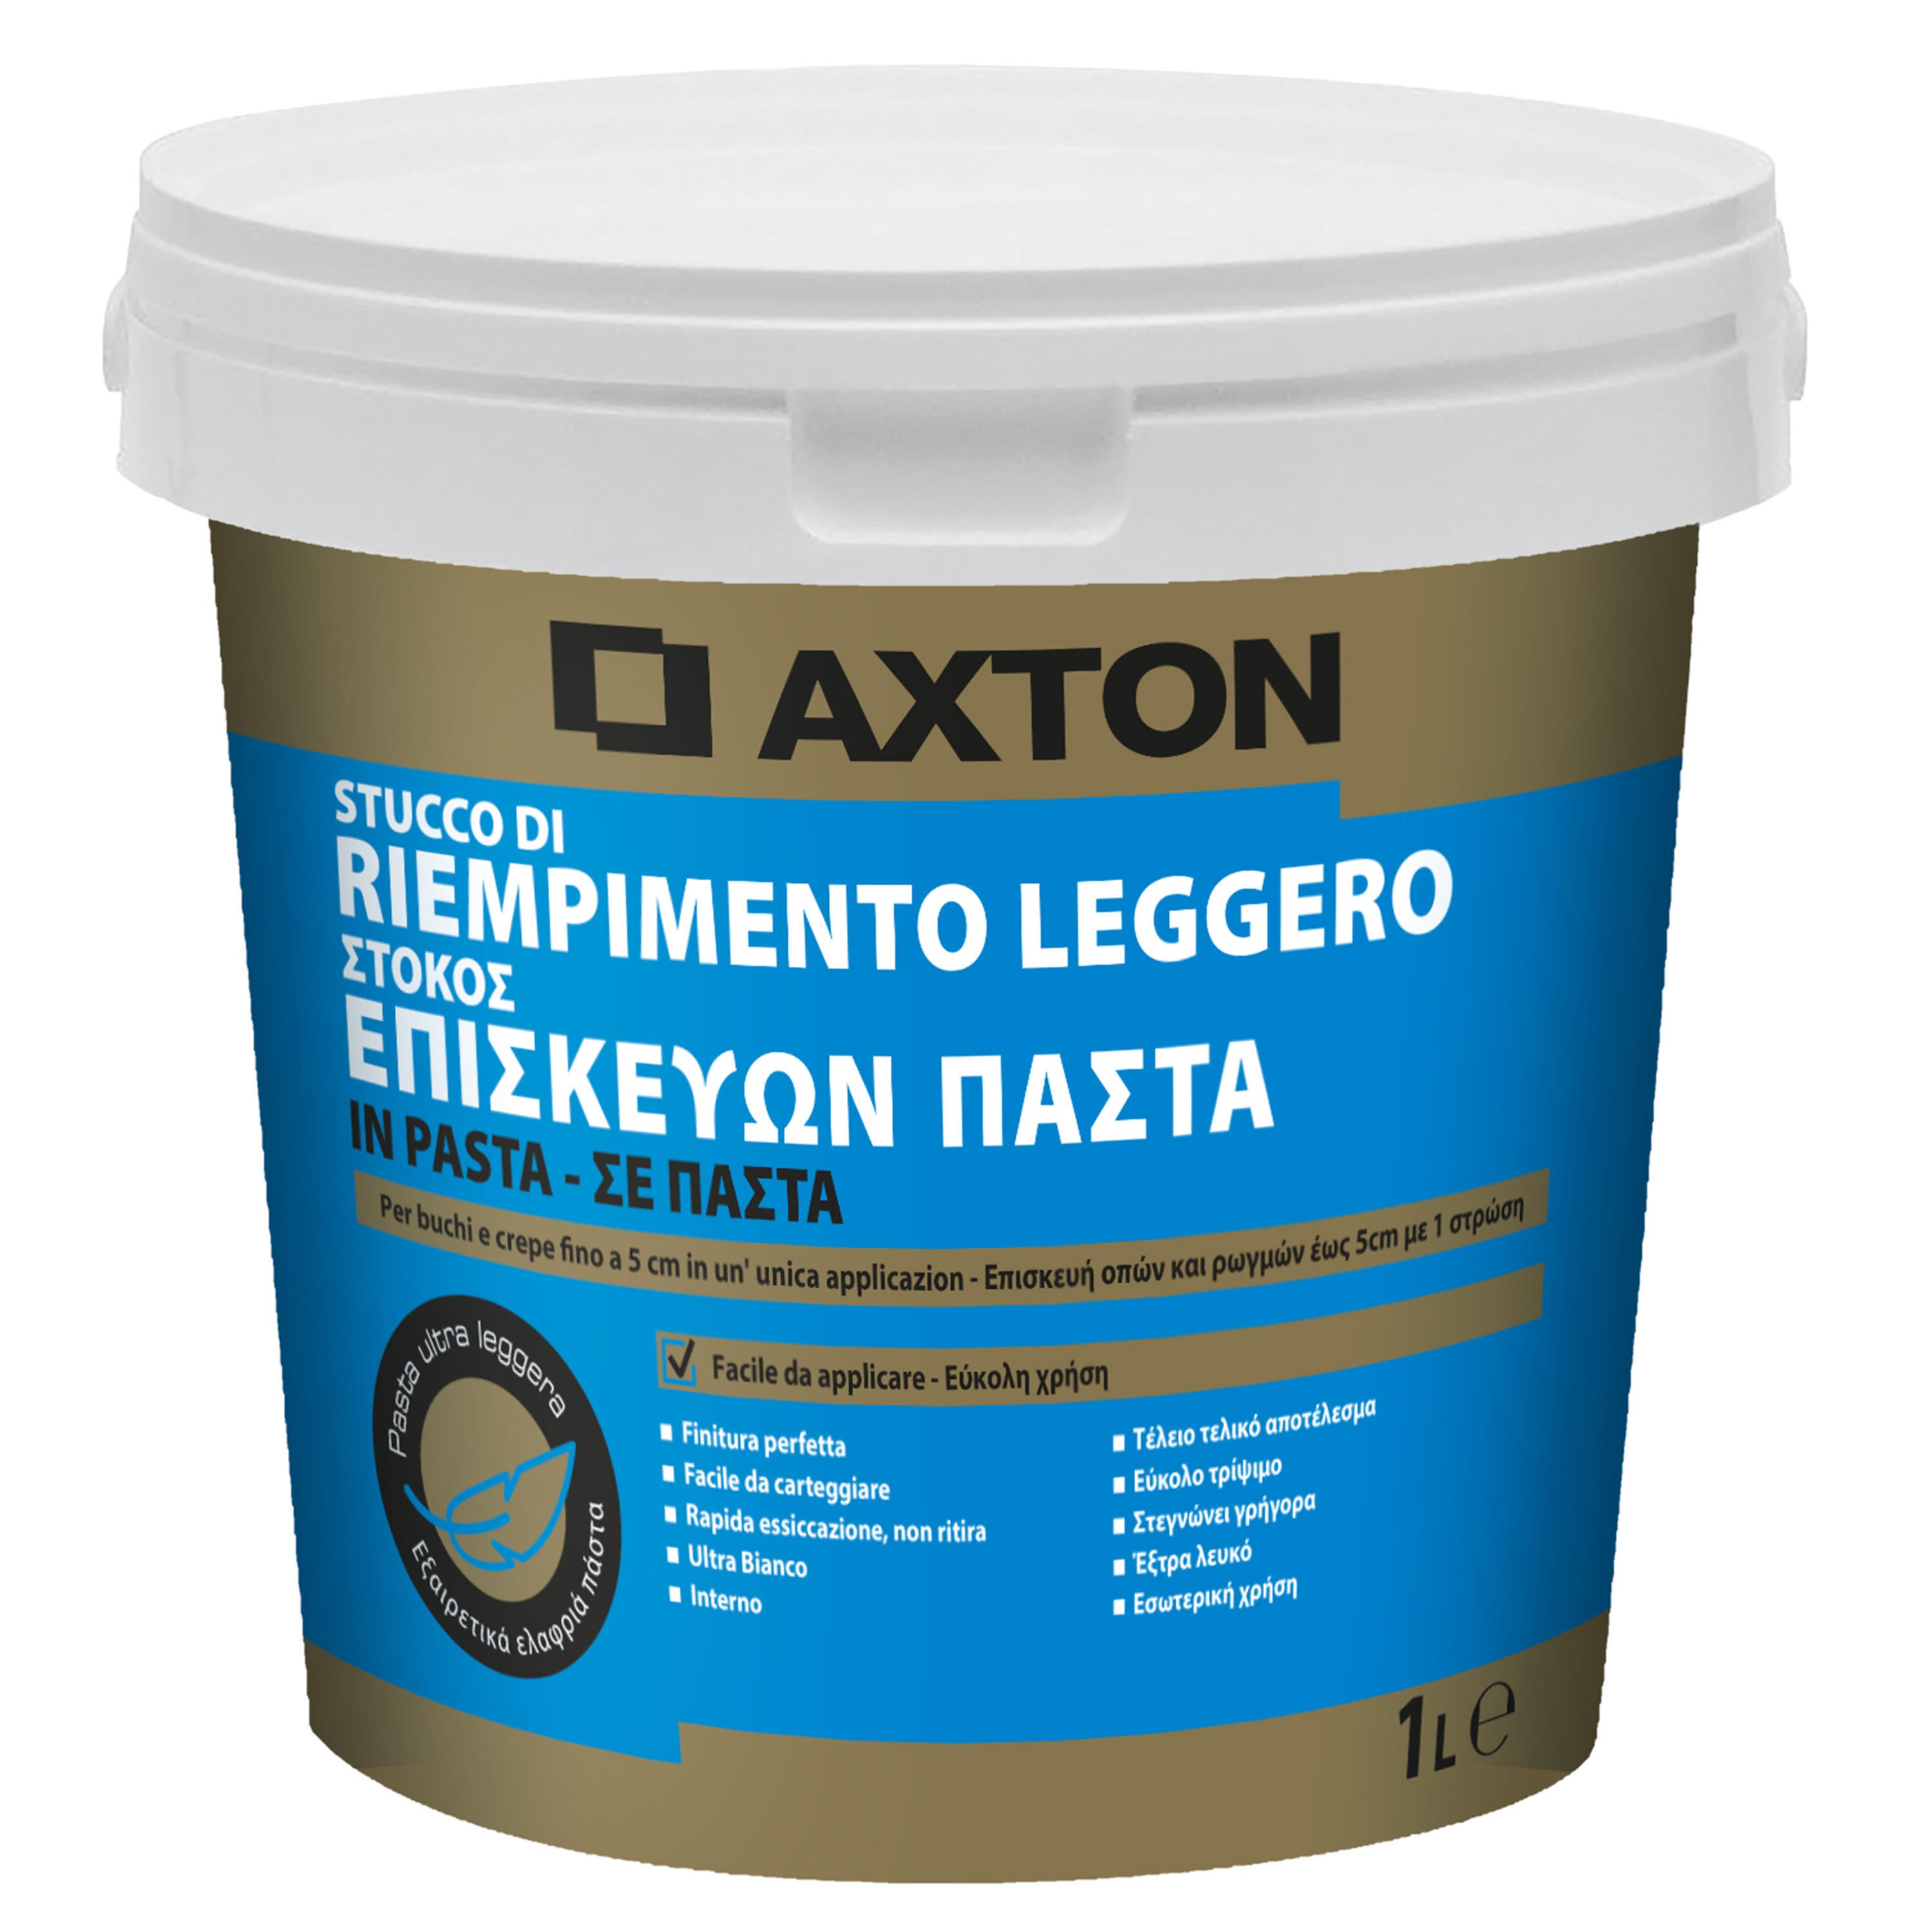 Stucco in pasta alleggerita AXTON 1 kg bianco - 2